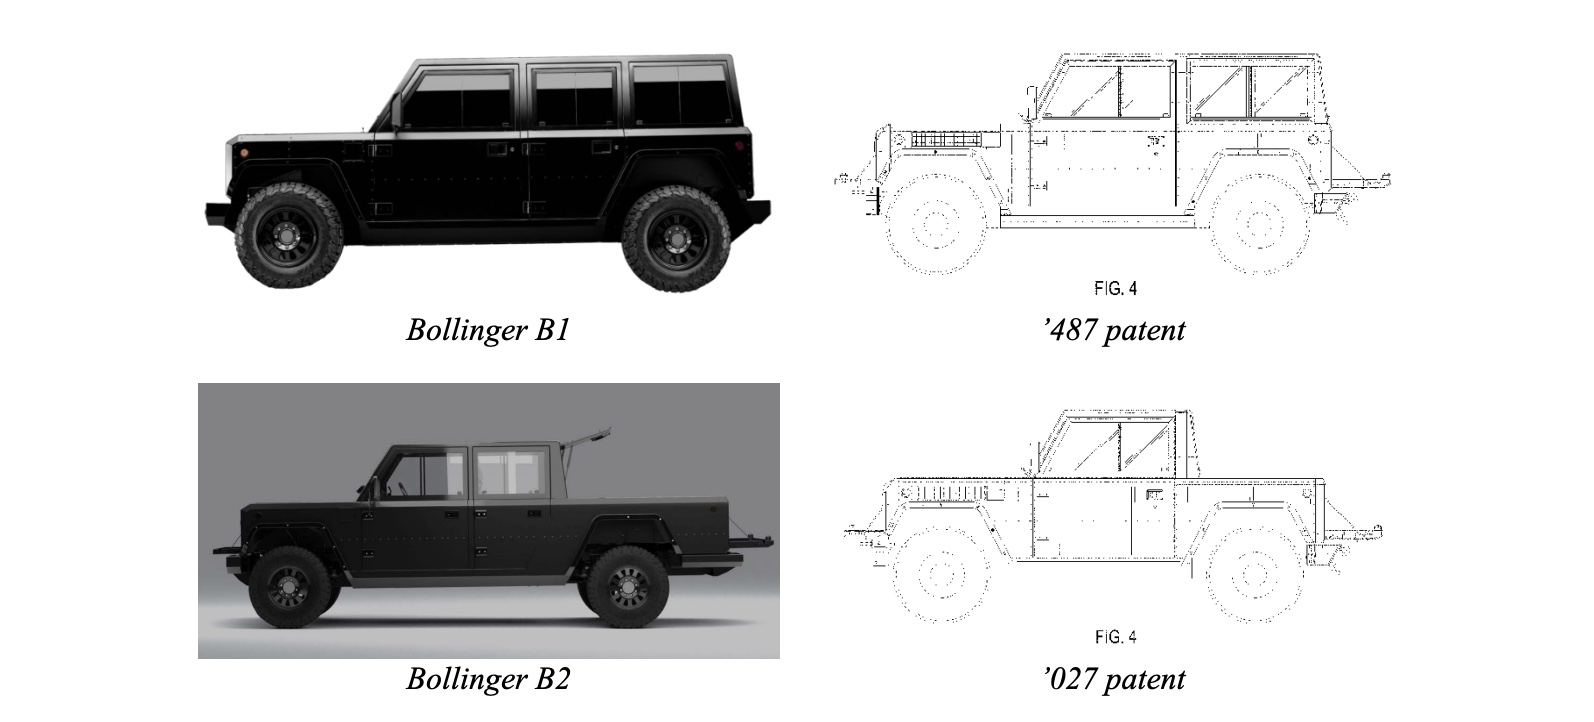 Bollinger Drawings B1 and B2